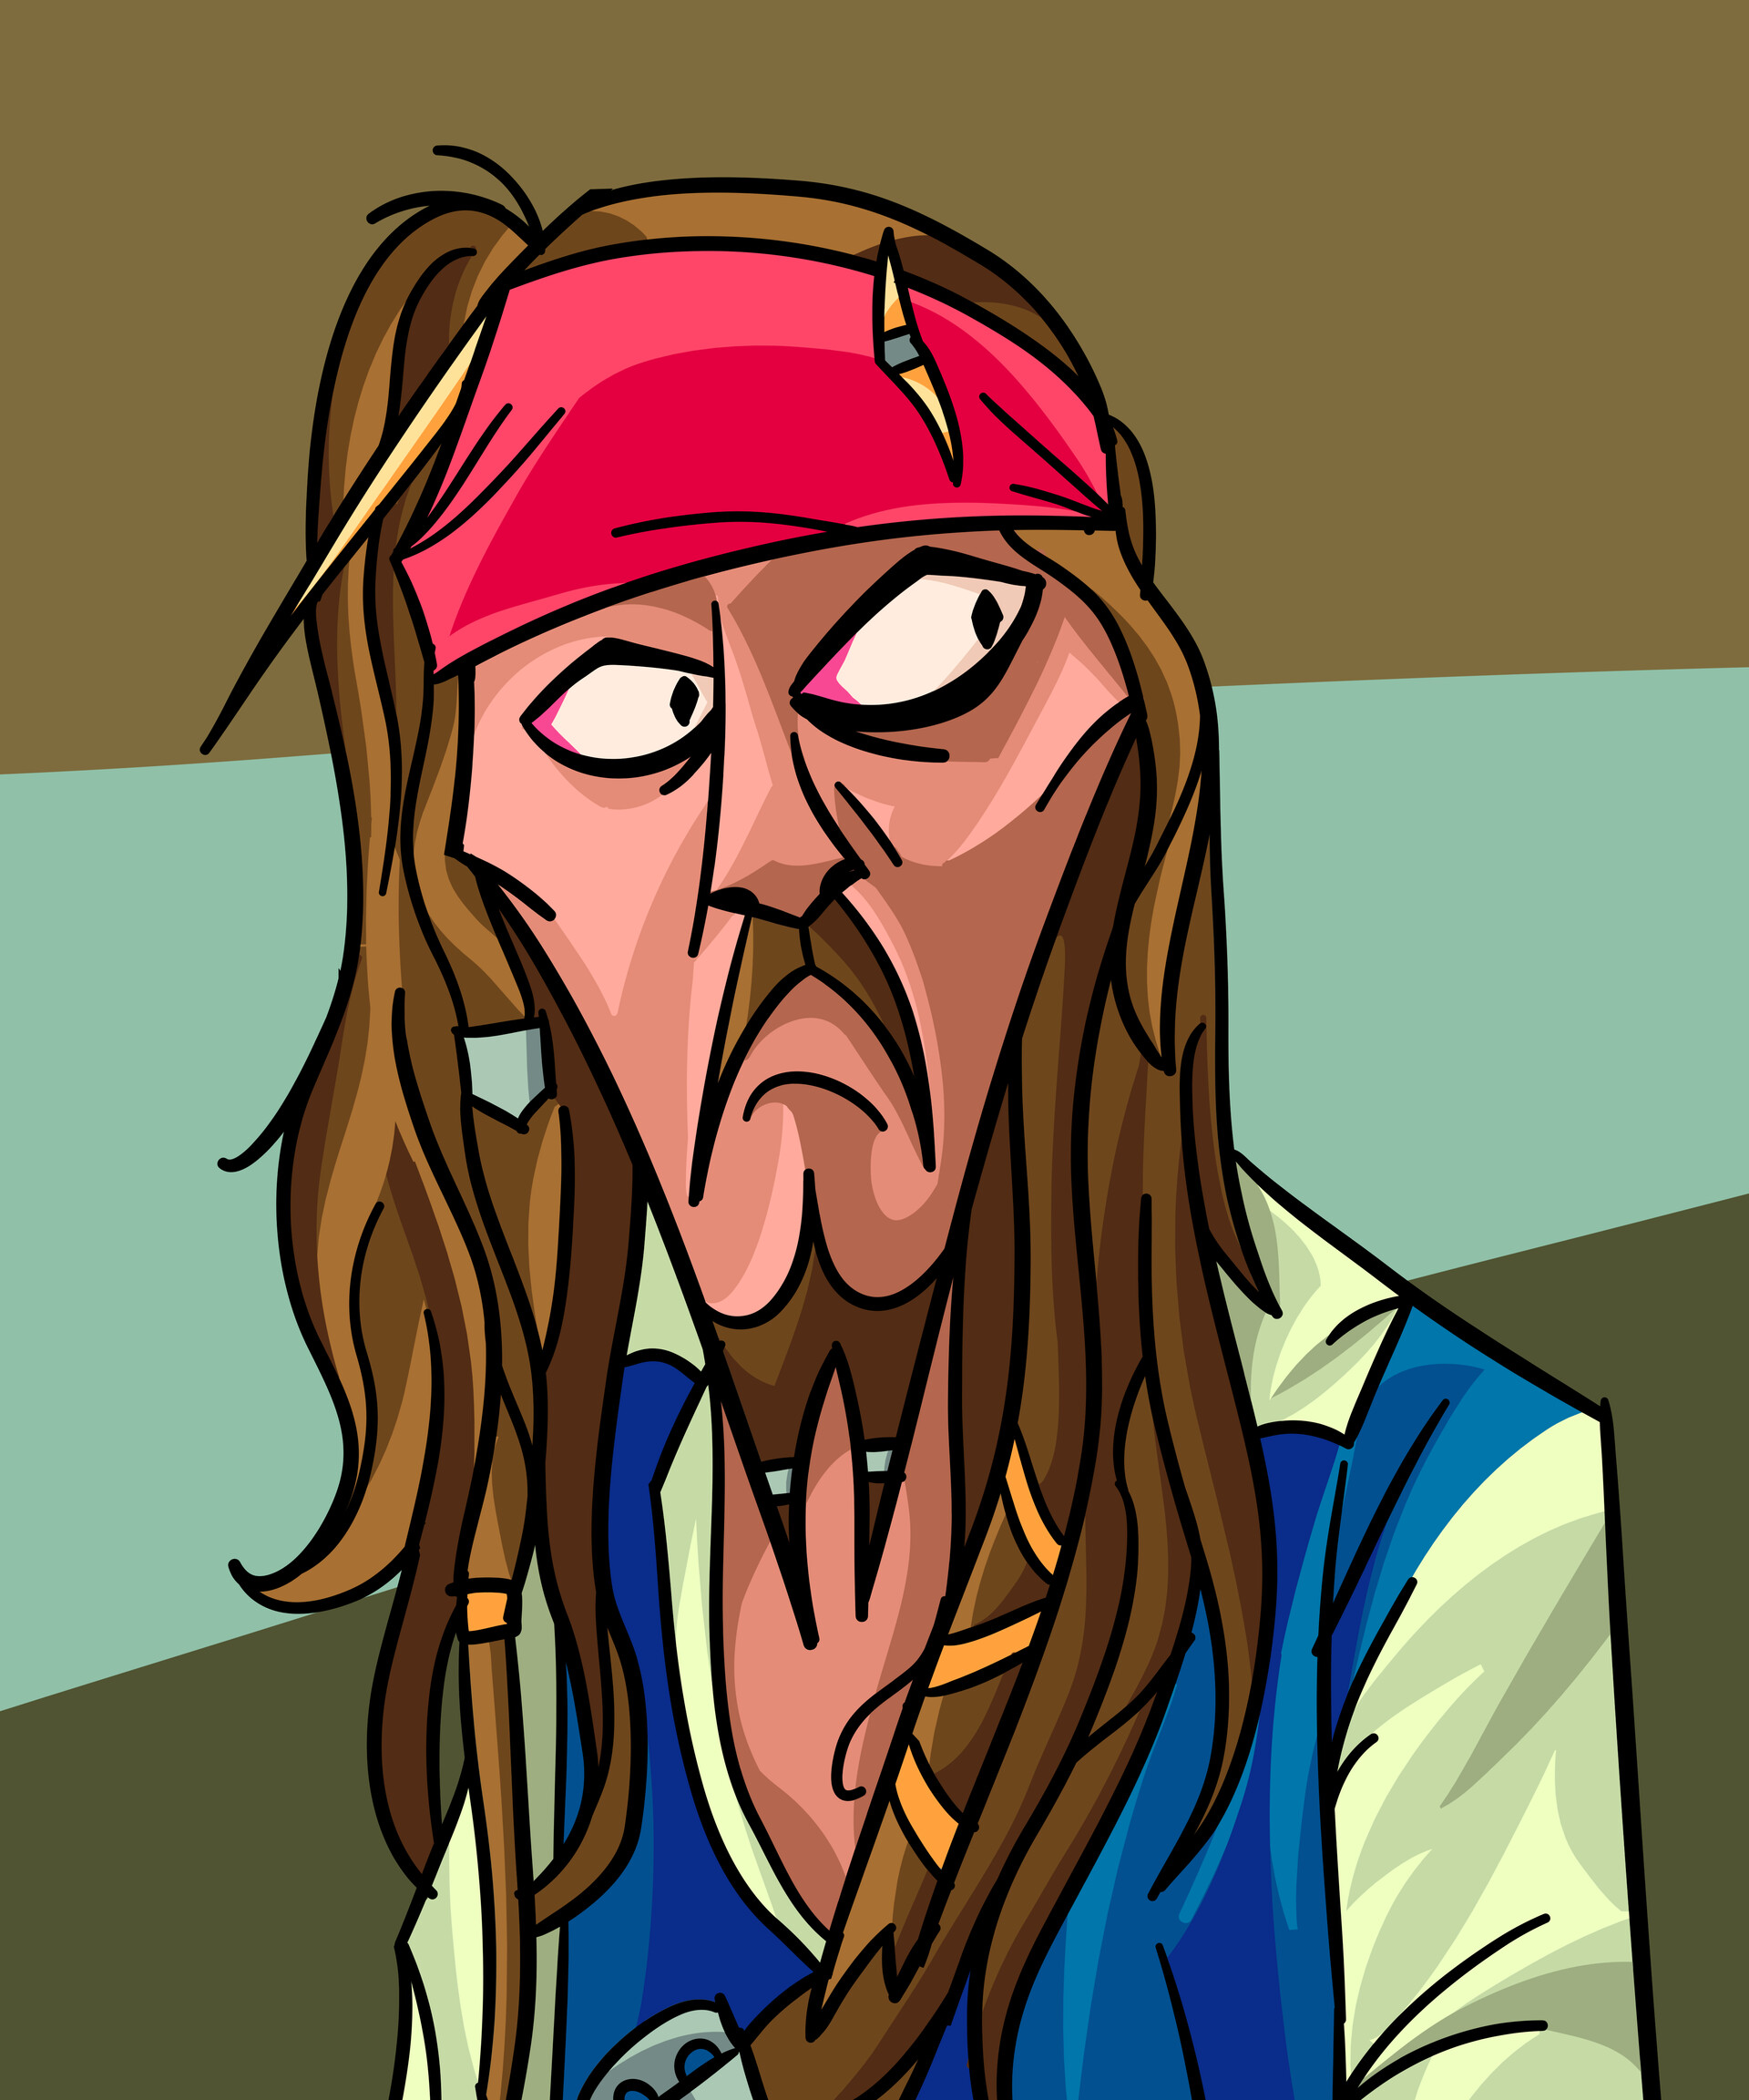 ArtStation - Cartoon portrait of Jack Sparrow